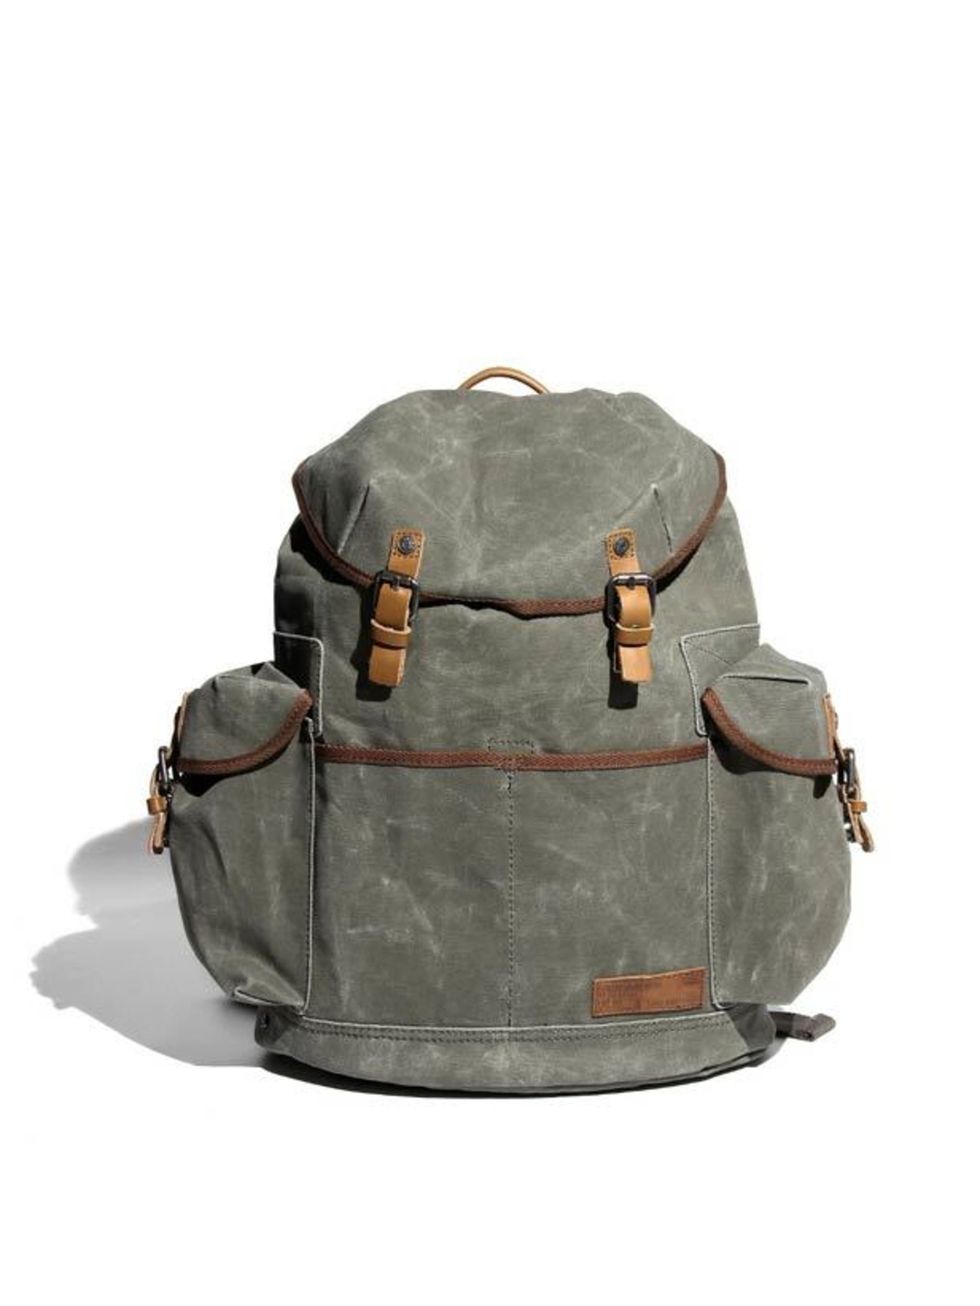 <p>One things for sure, backpacks will always be our downtime bag of choice. So mix fashion and function with this inexpensive Esprit version <a href="http://www.esprit.co.uk/?LKZ=GB">Esprit</a> khaki rucksack, £55</p>